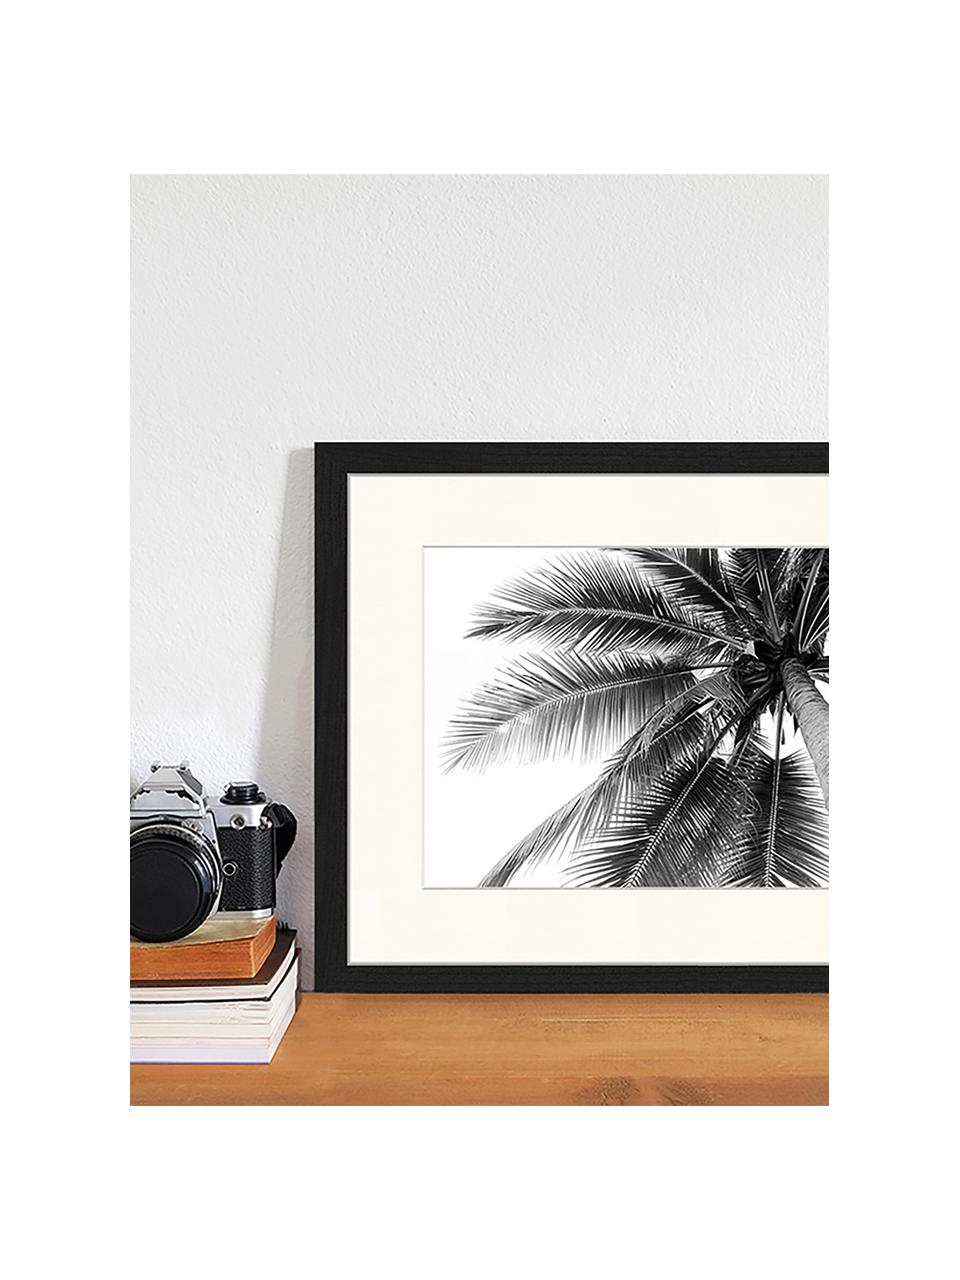 Gerahmter Digitaldruck Coconut Palm Tree, Bild: Digitaldruck auf Papier, , Rahmen: Holz, lackiert, Front: Plexiglas, Coconut Palm Tree, B 43 x H 33 cm